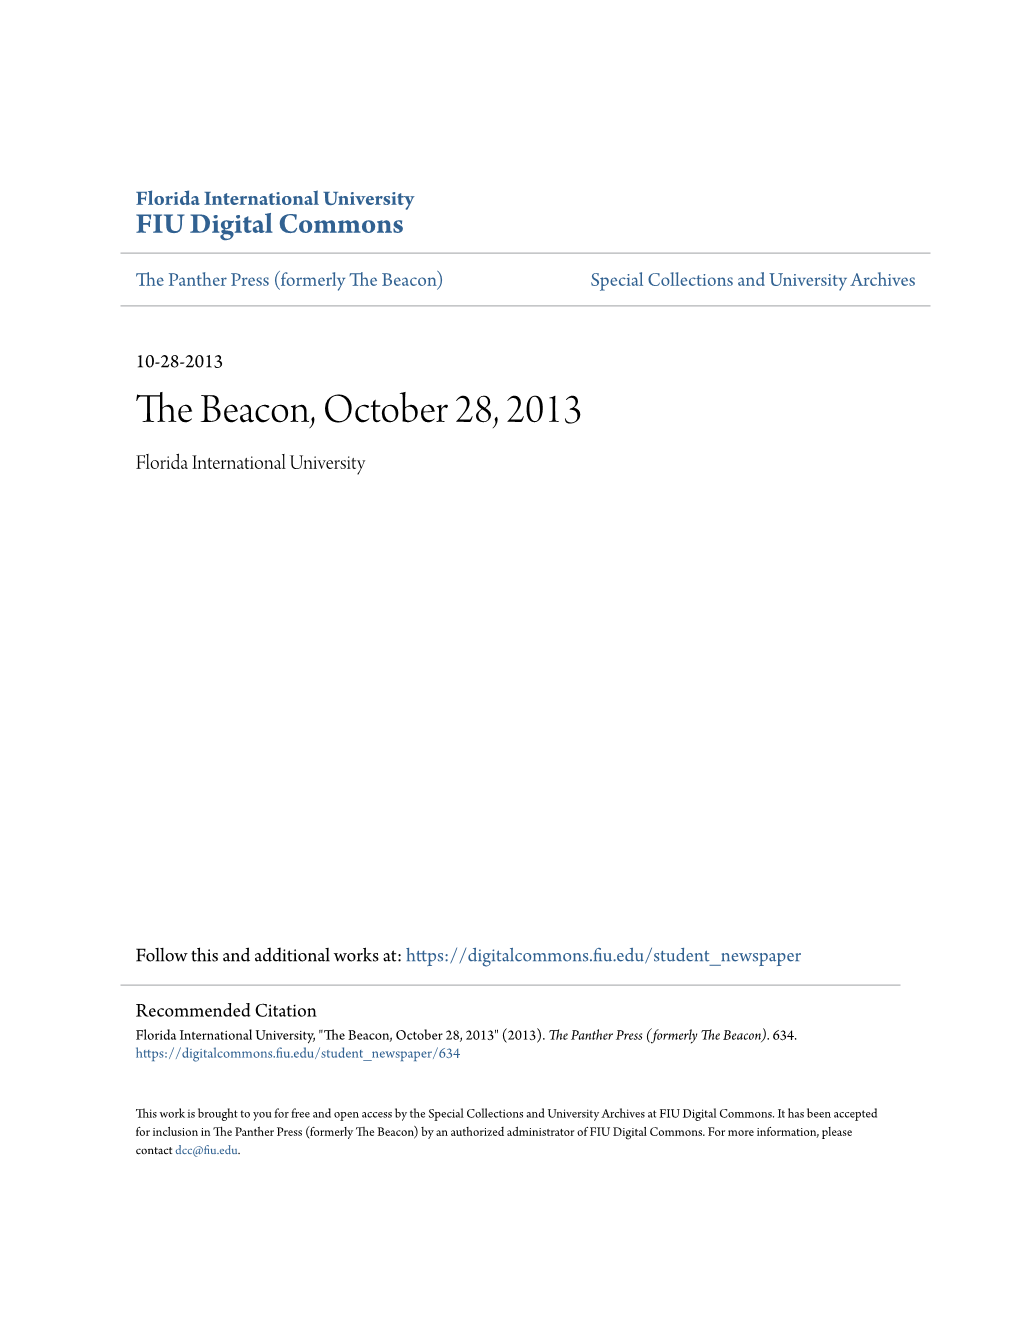 The Beacon, October 28, 2013 Florida International University